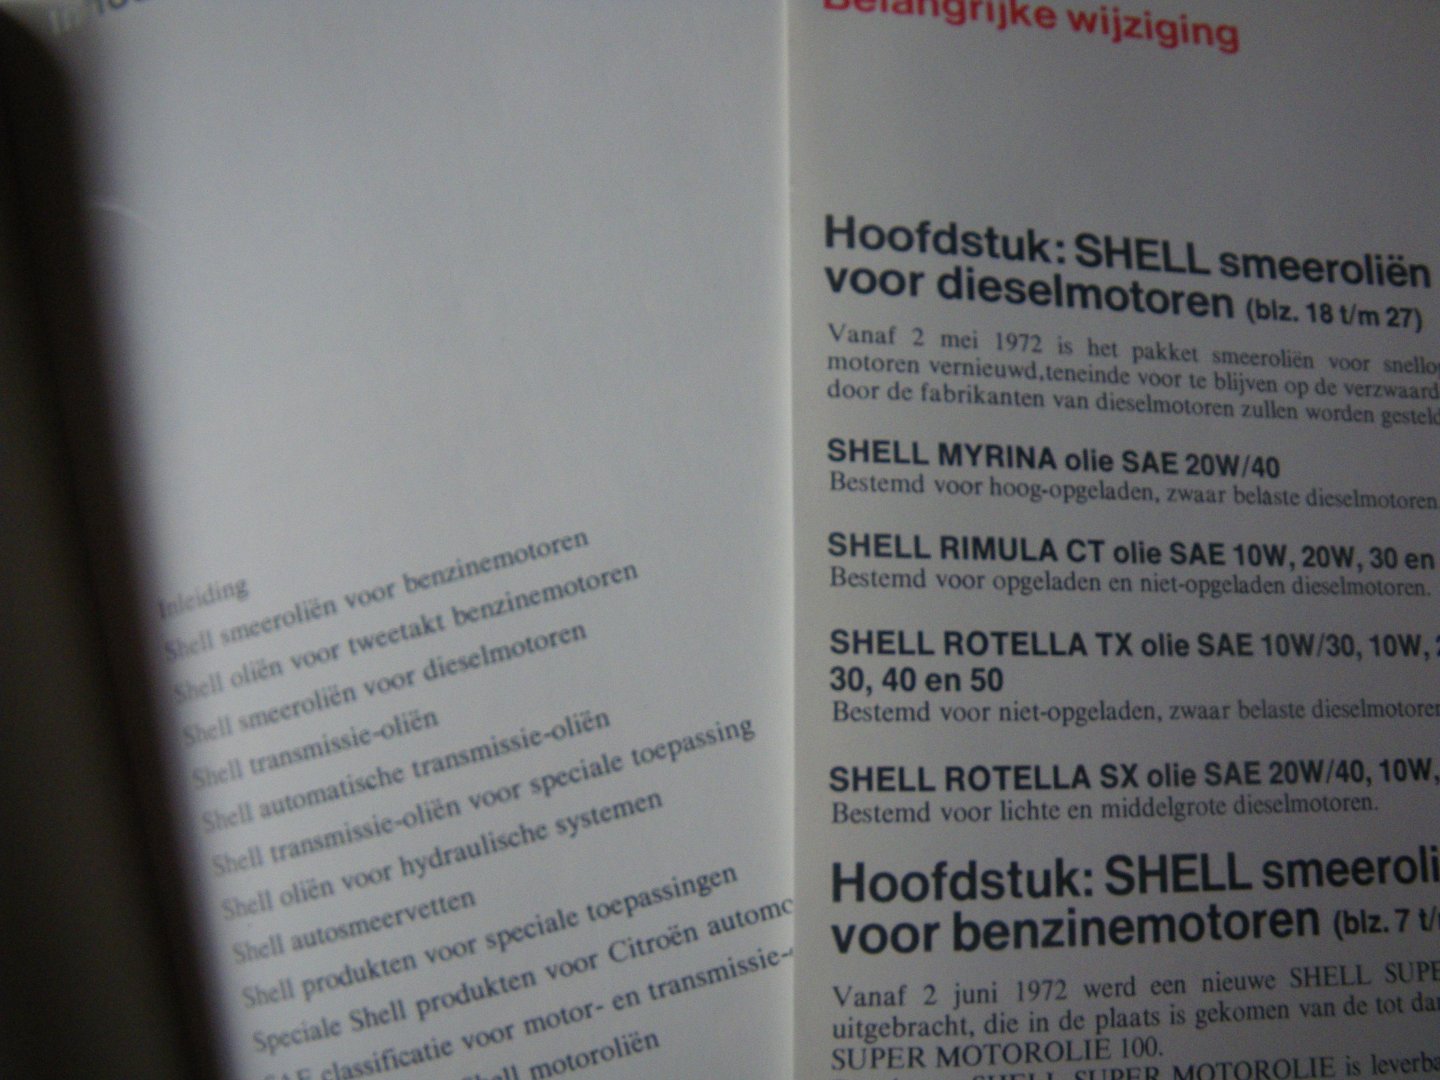 Shell-Nederland - Shell smeermiddelen voor wegverkeer en landbouw